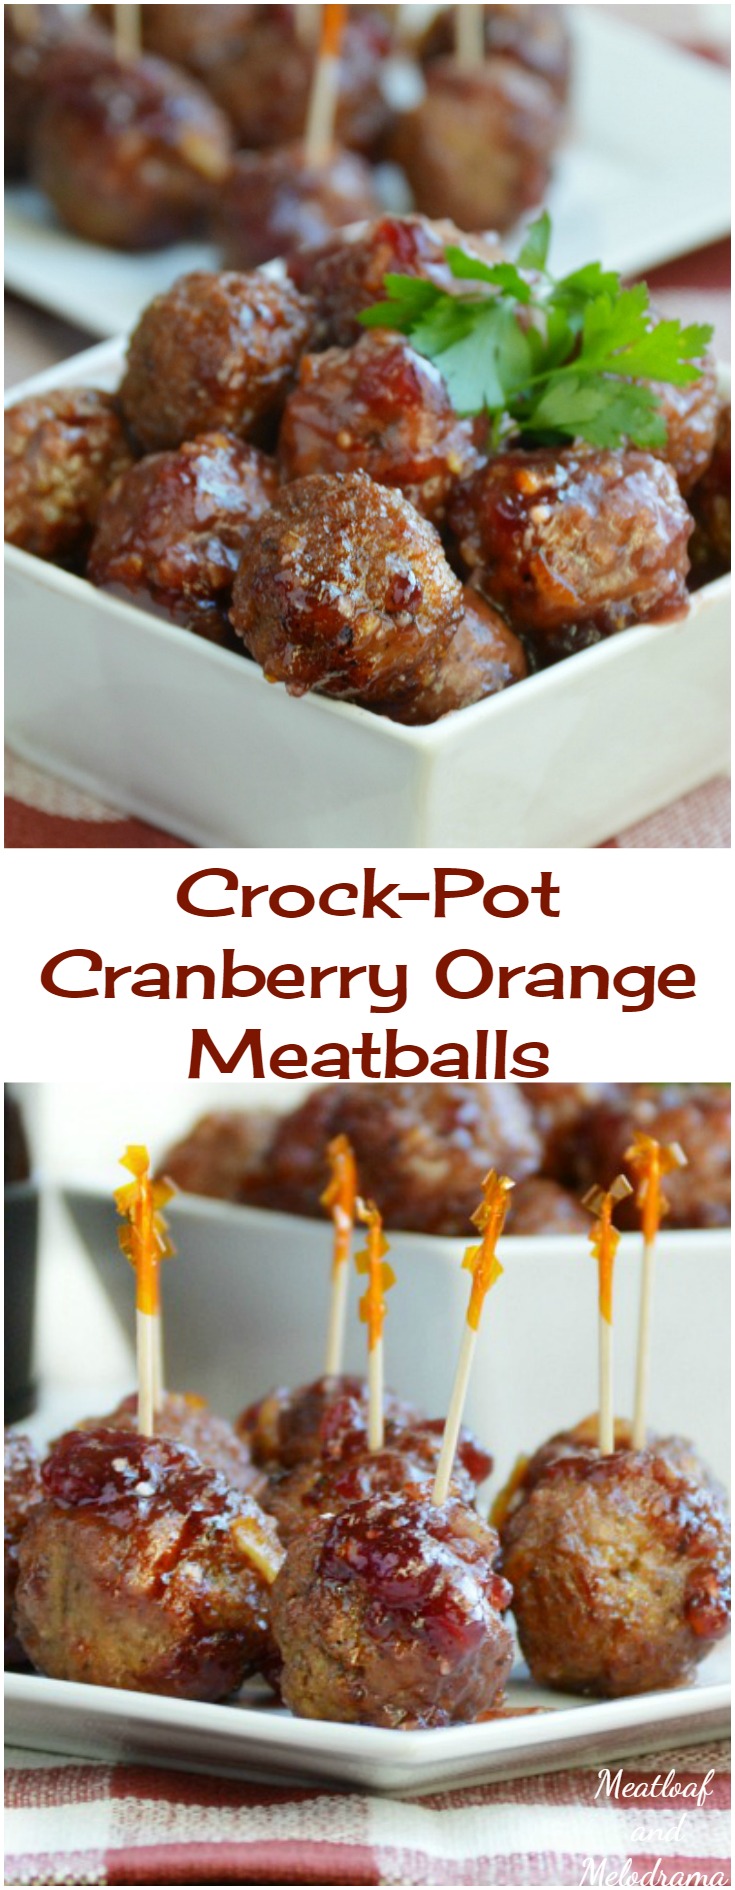 Crock-Pot Cranberry Orange Meatballs